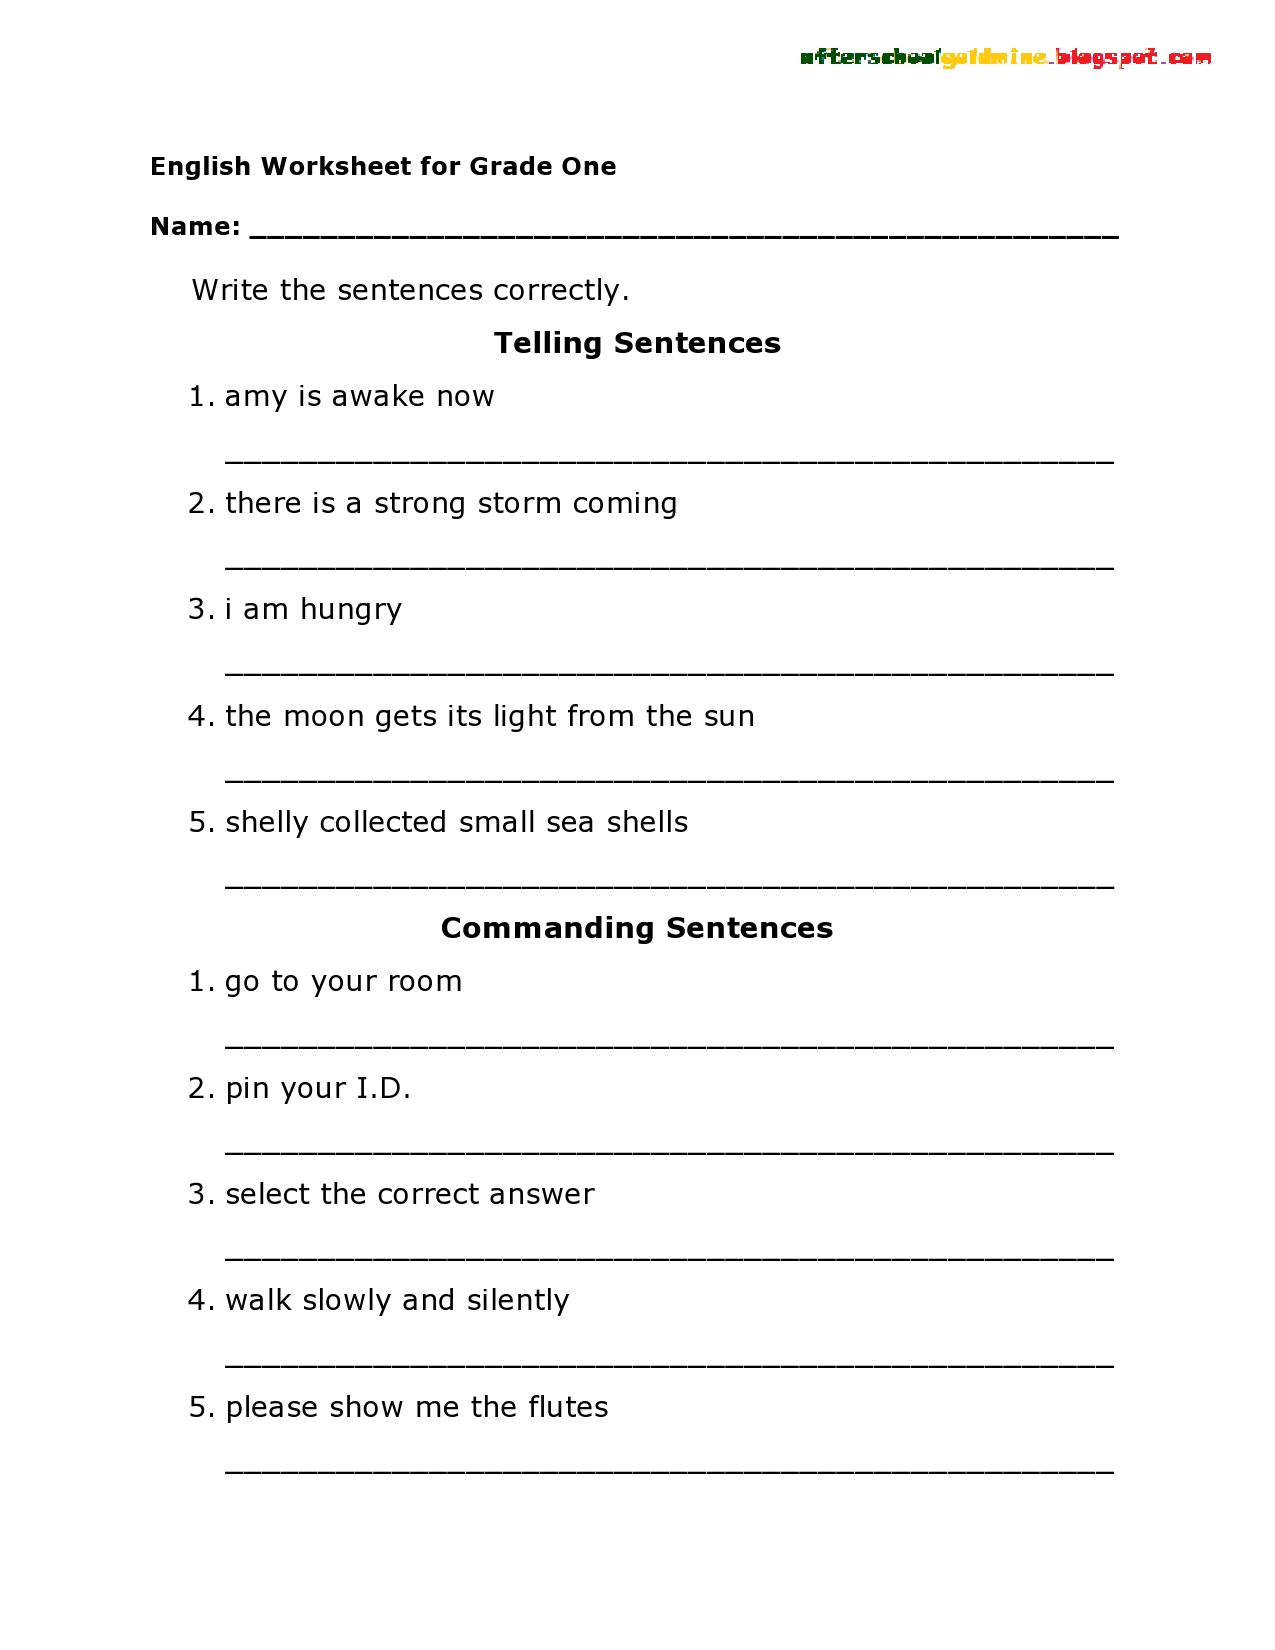 15-best-images-of-sentence-handwriting-worksheets-sentence-worksheets-practice-cursive